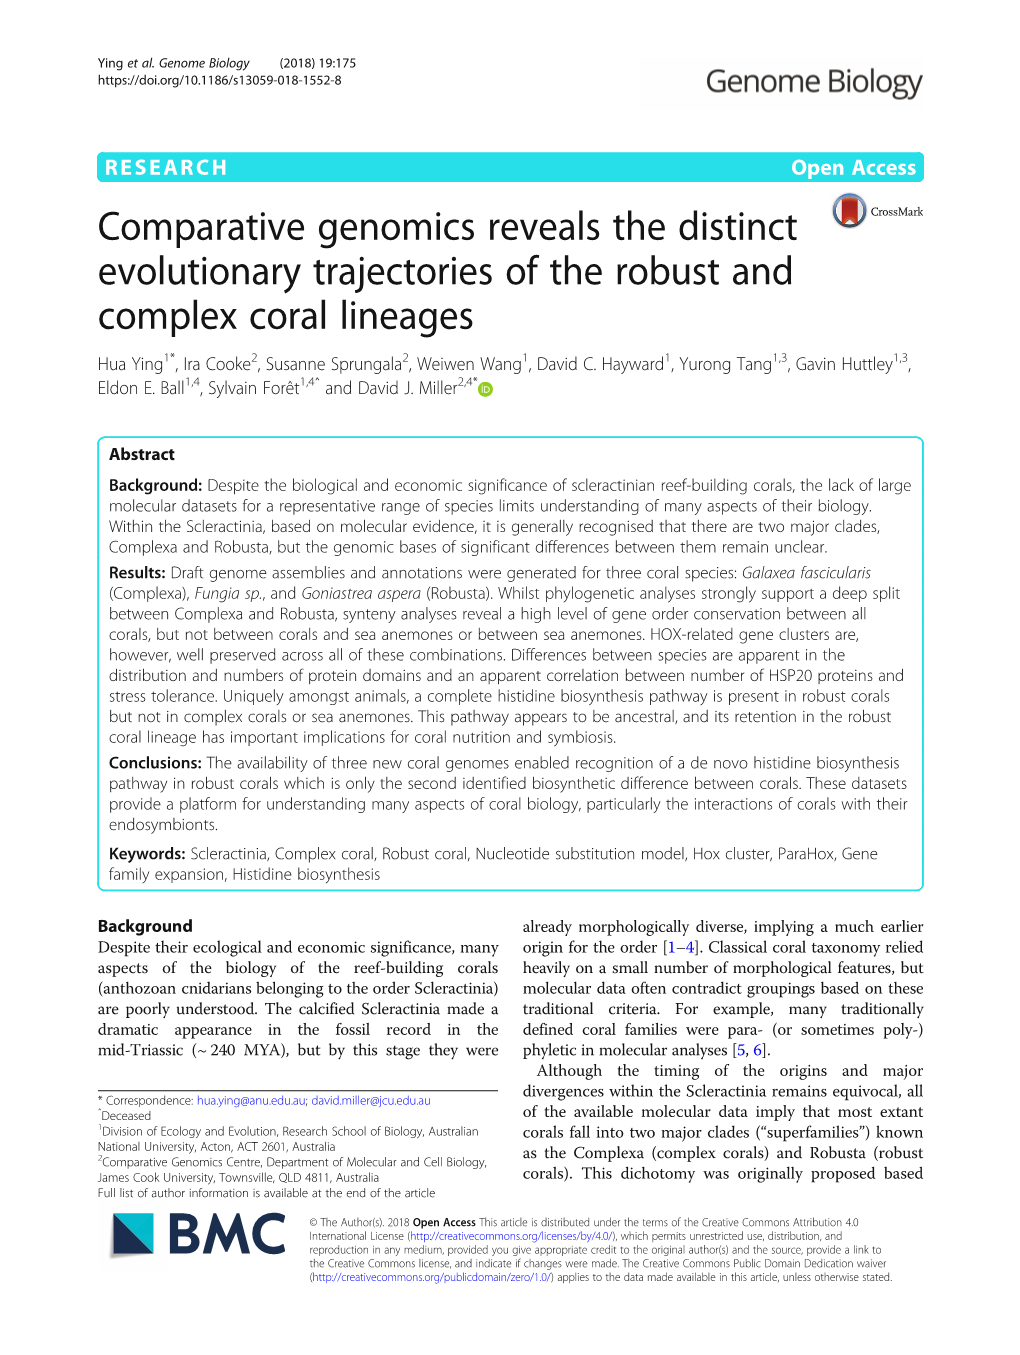 Comparative Genomics Reveals the Distinct Evolutionary Trajectories Of